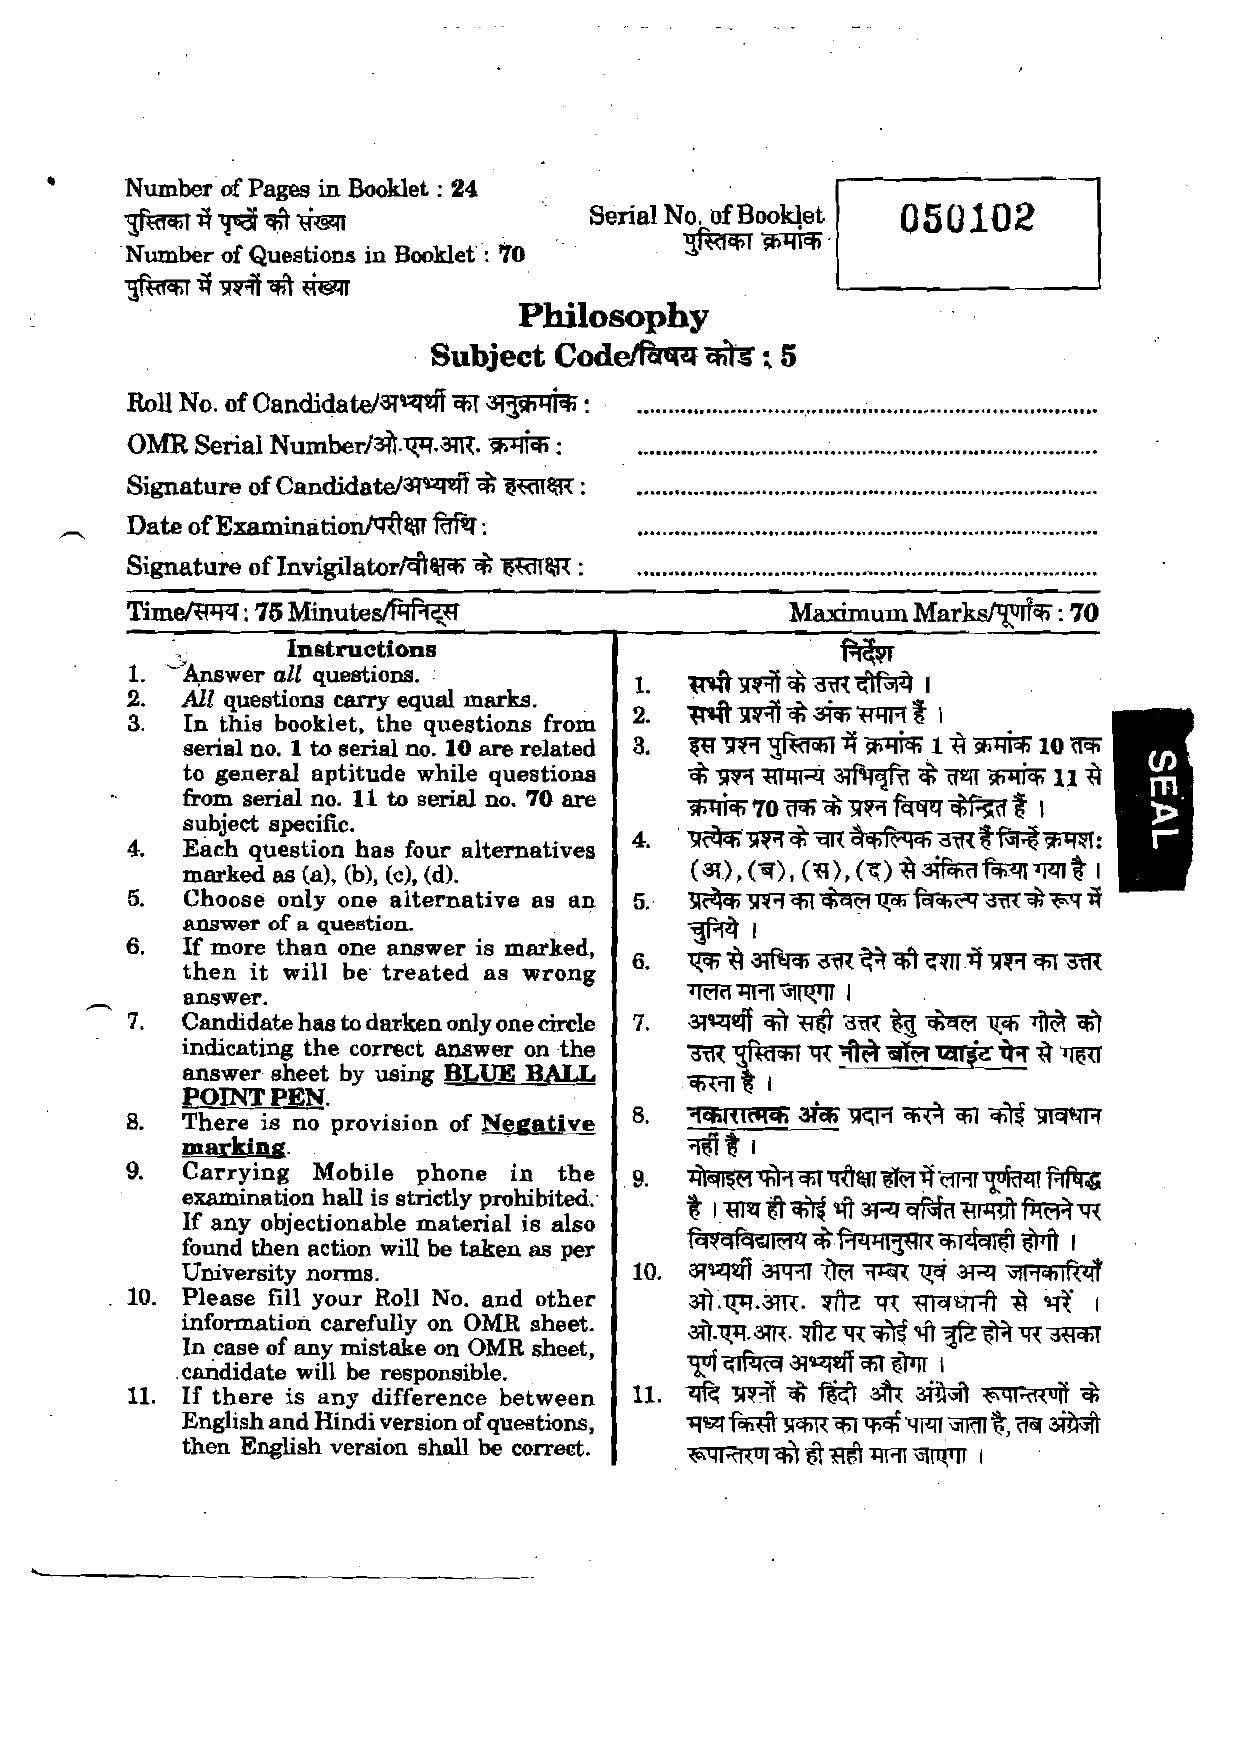 URATPG Philosophy 2012 Question Paper - Page 1